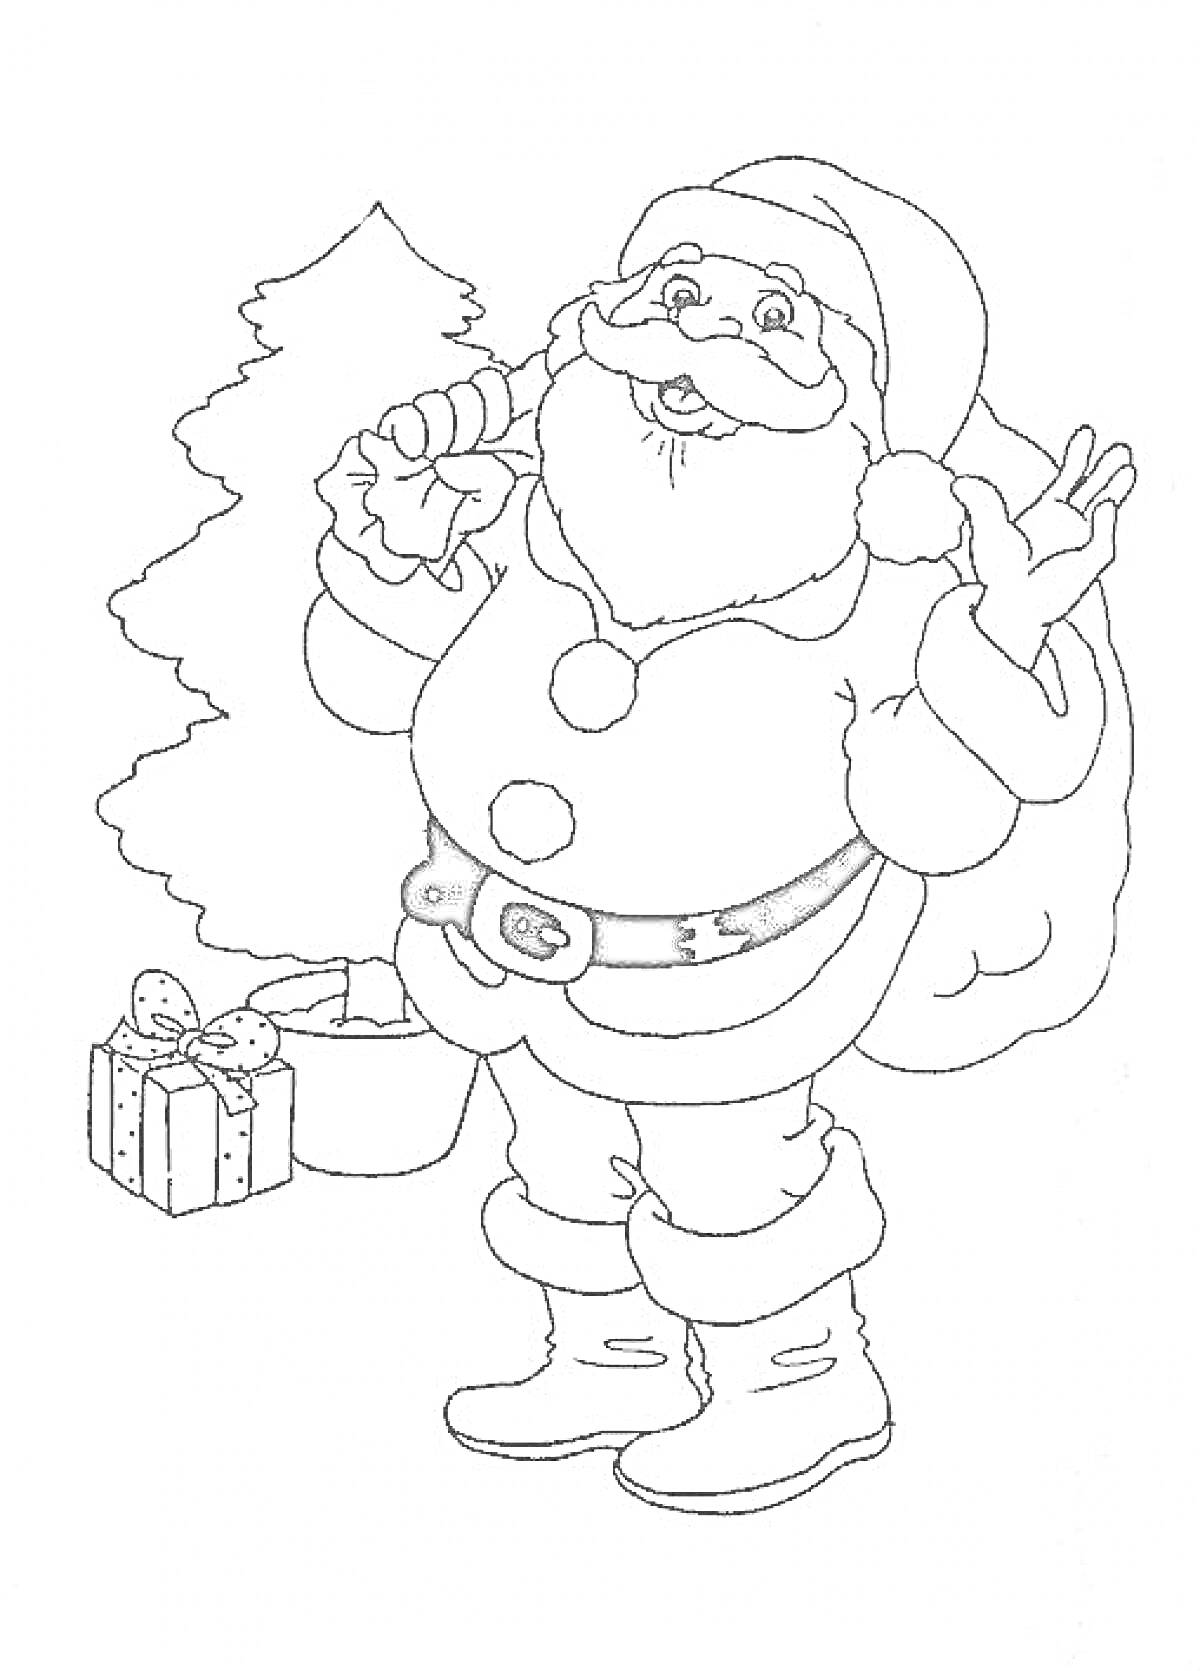 Санта Клаус у елки с мешком подарков и подарком в коробке